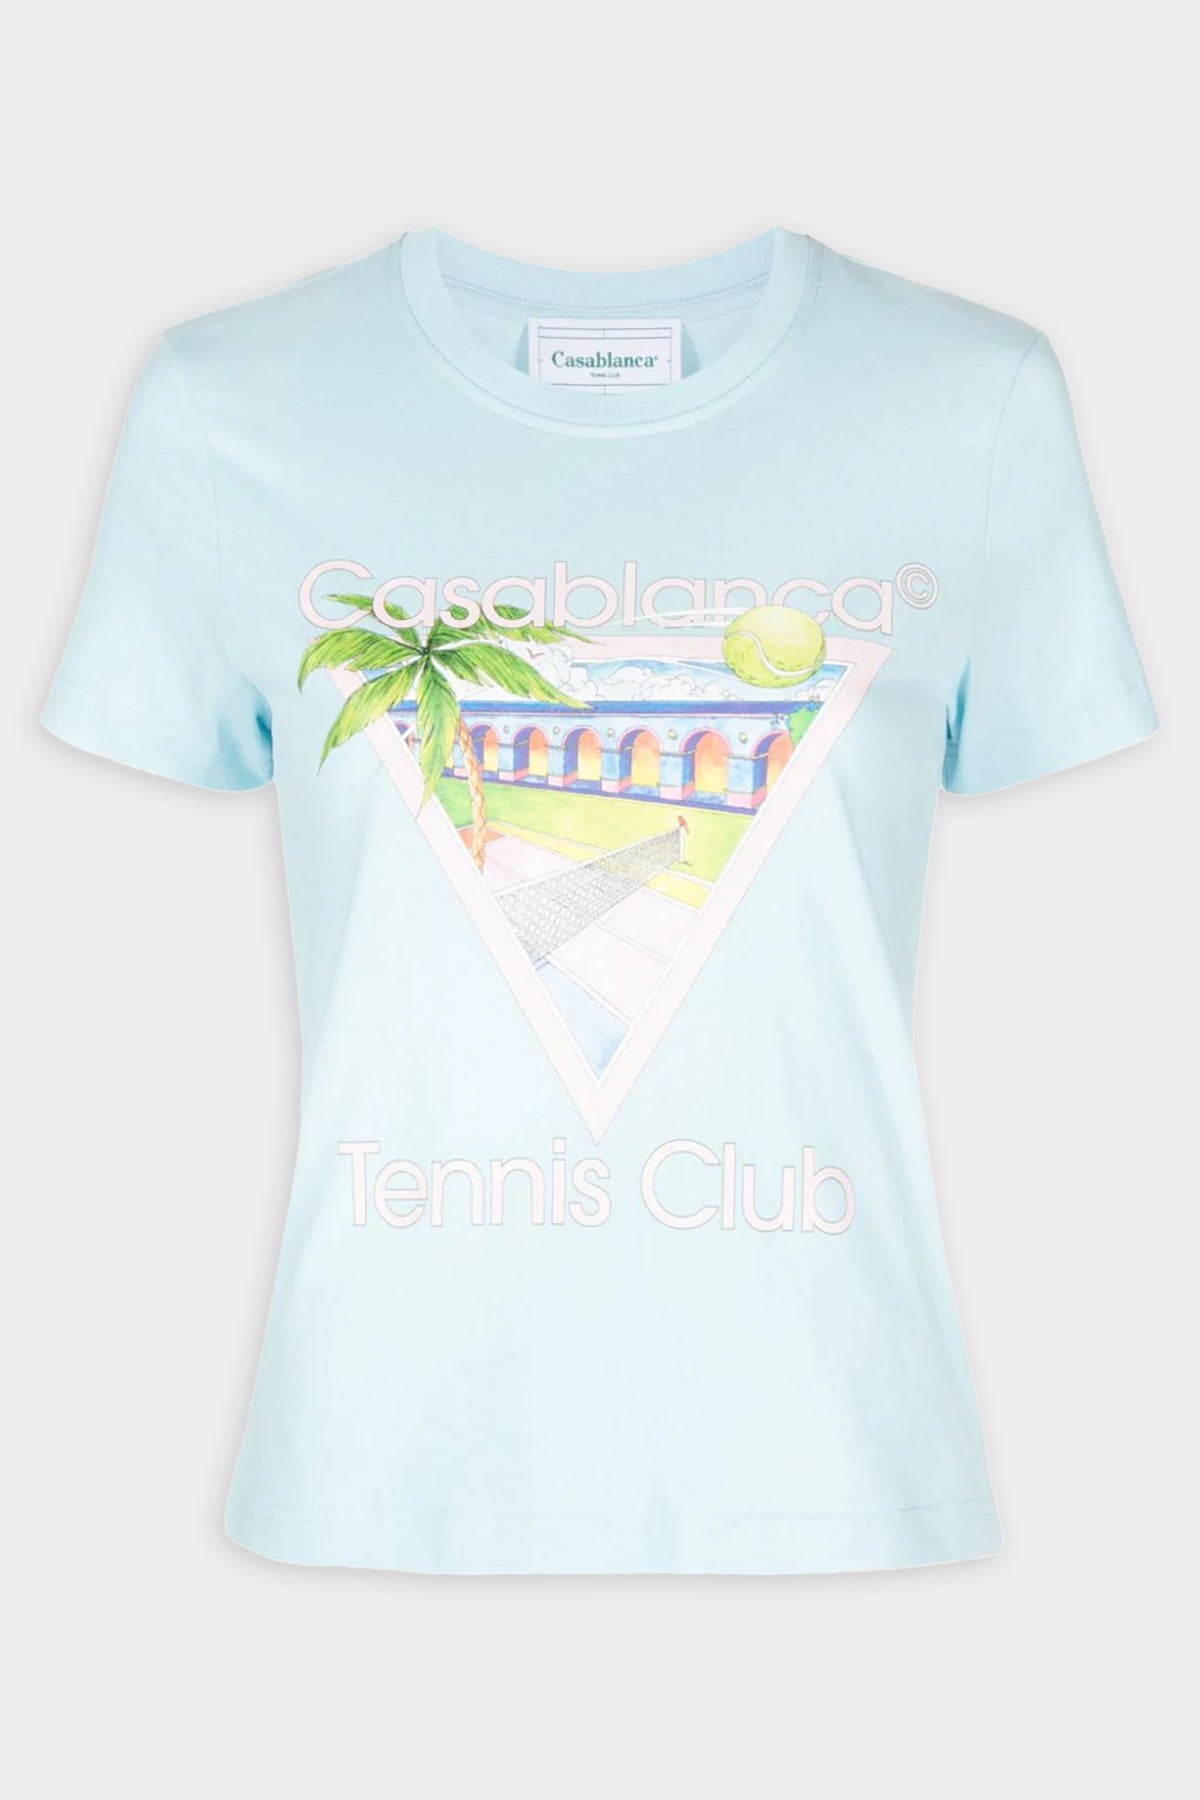 Tennis Club Icon Printed T-Shirt in Pale Blue - shop-olivia.com